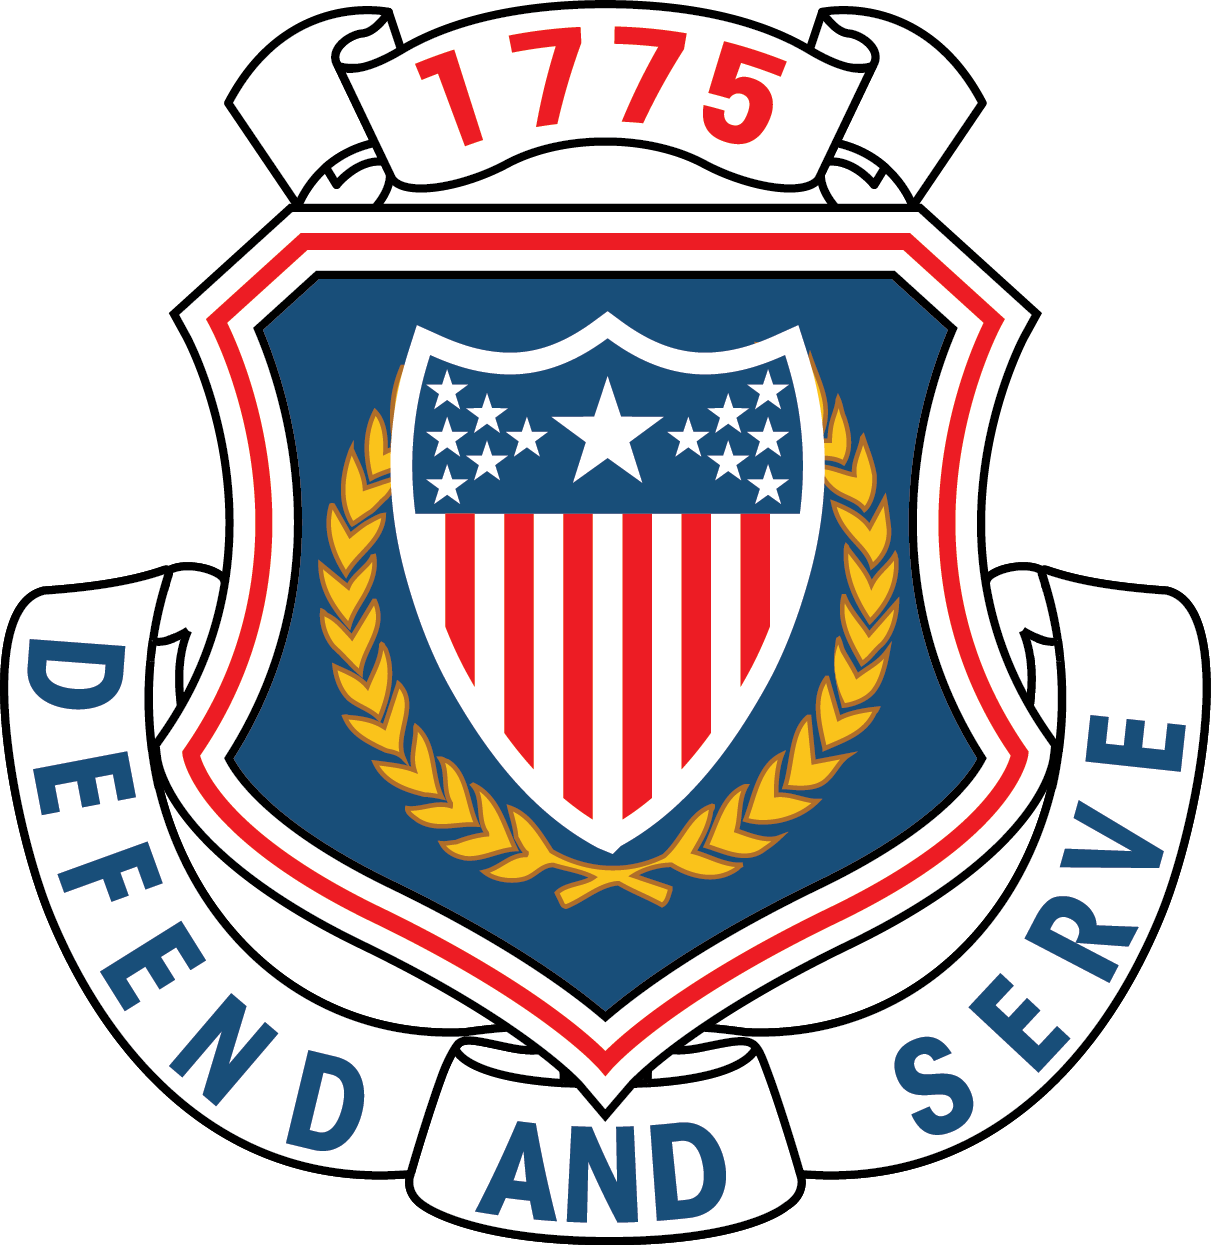 Adjutant General Corps - Adjutant General (1211x1245)